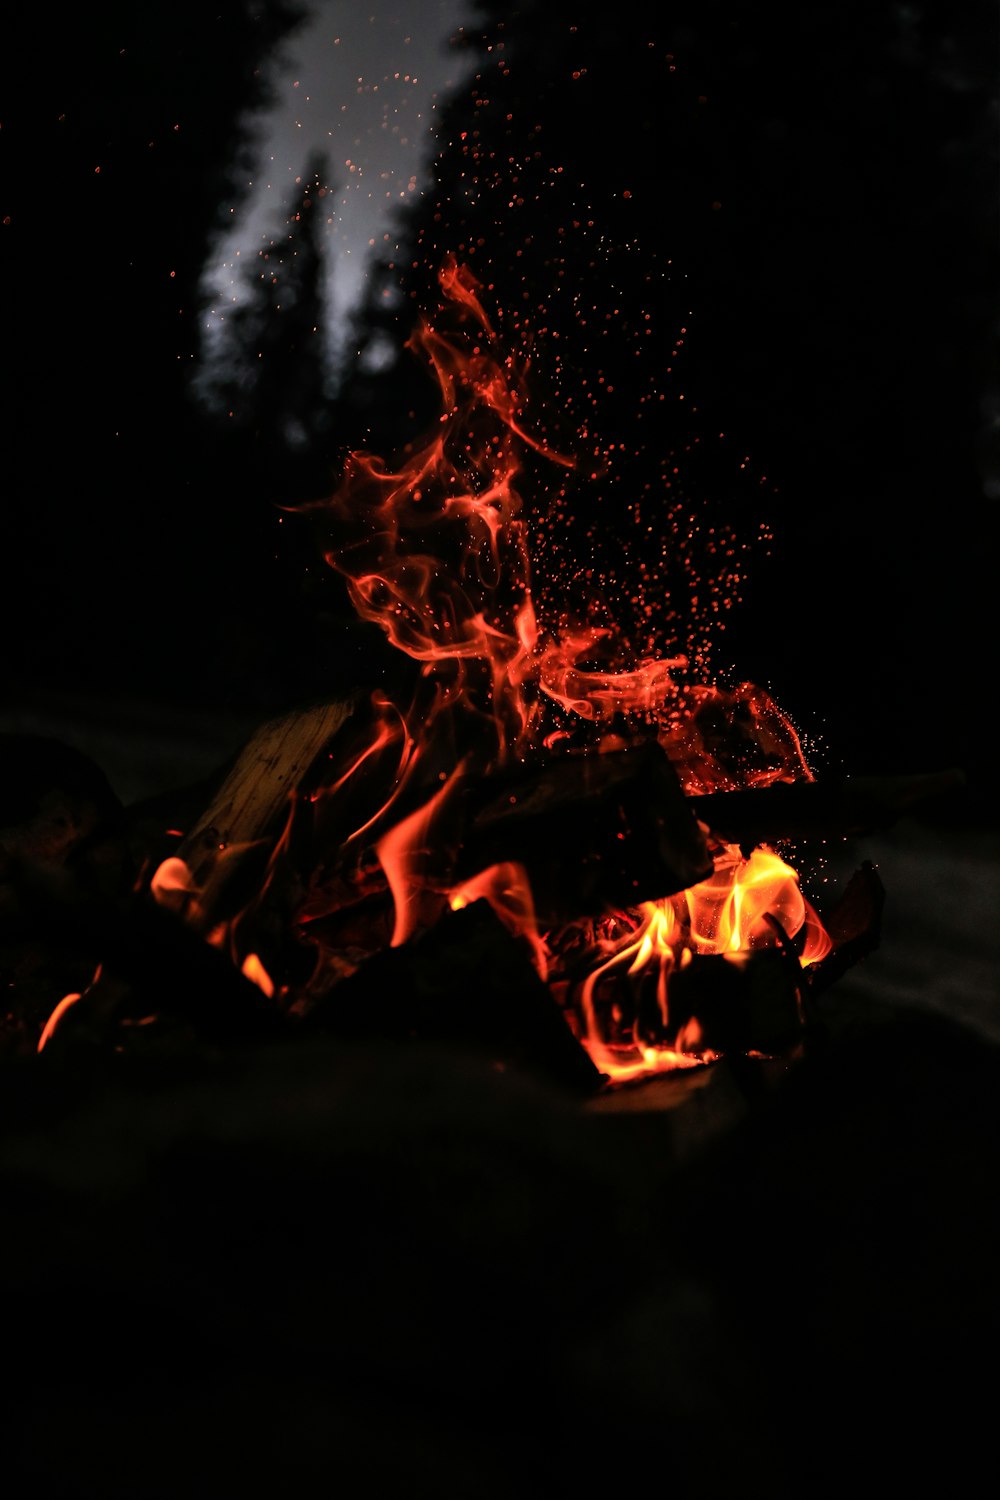 bonfire at forest